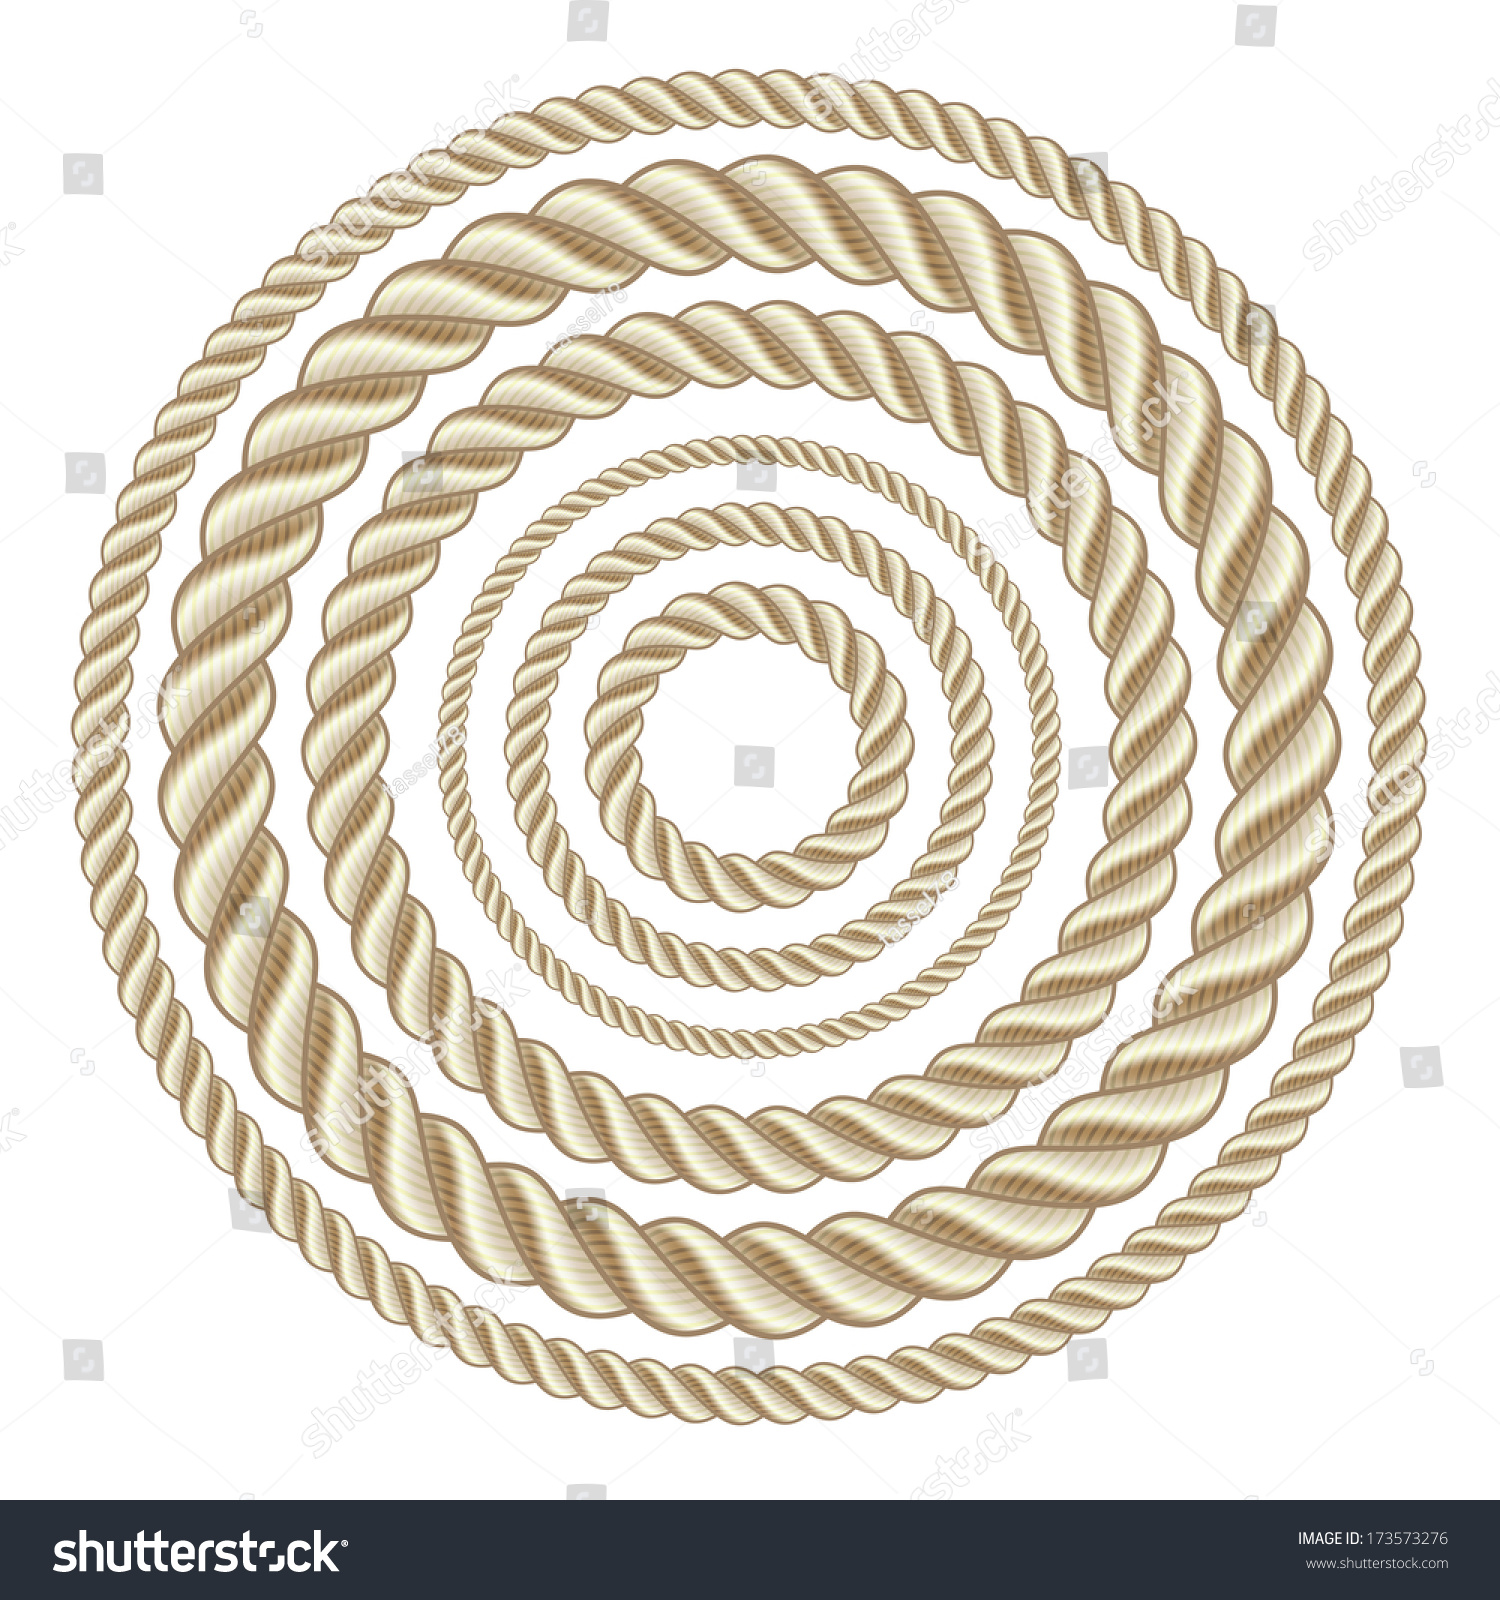 Circle Rope Illustration - 173573276 : Shutterstock